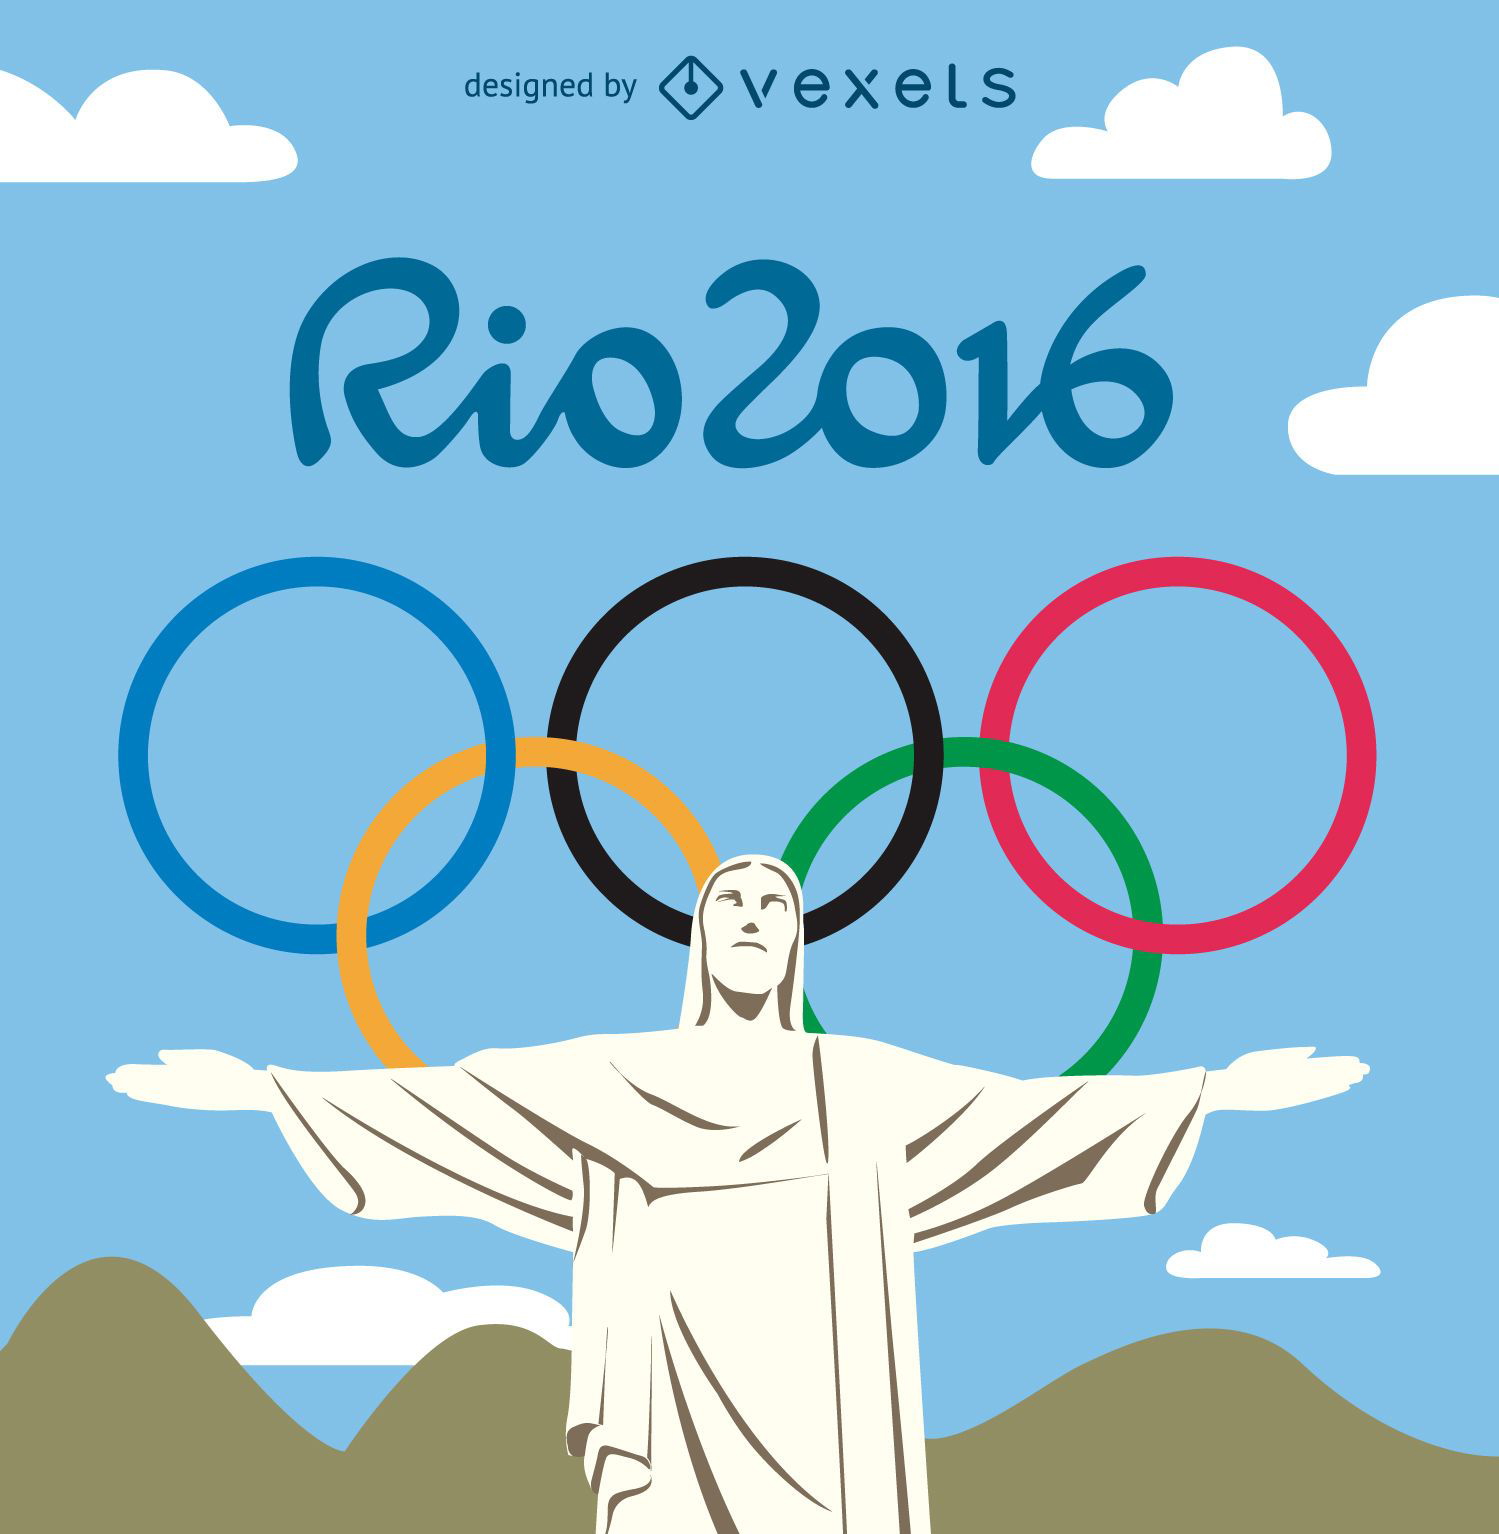 Rio 2016 olympic games - Redeemer Christ